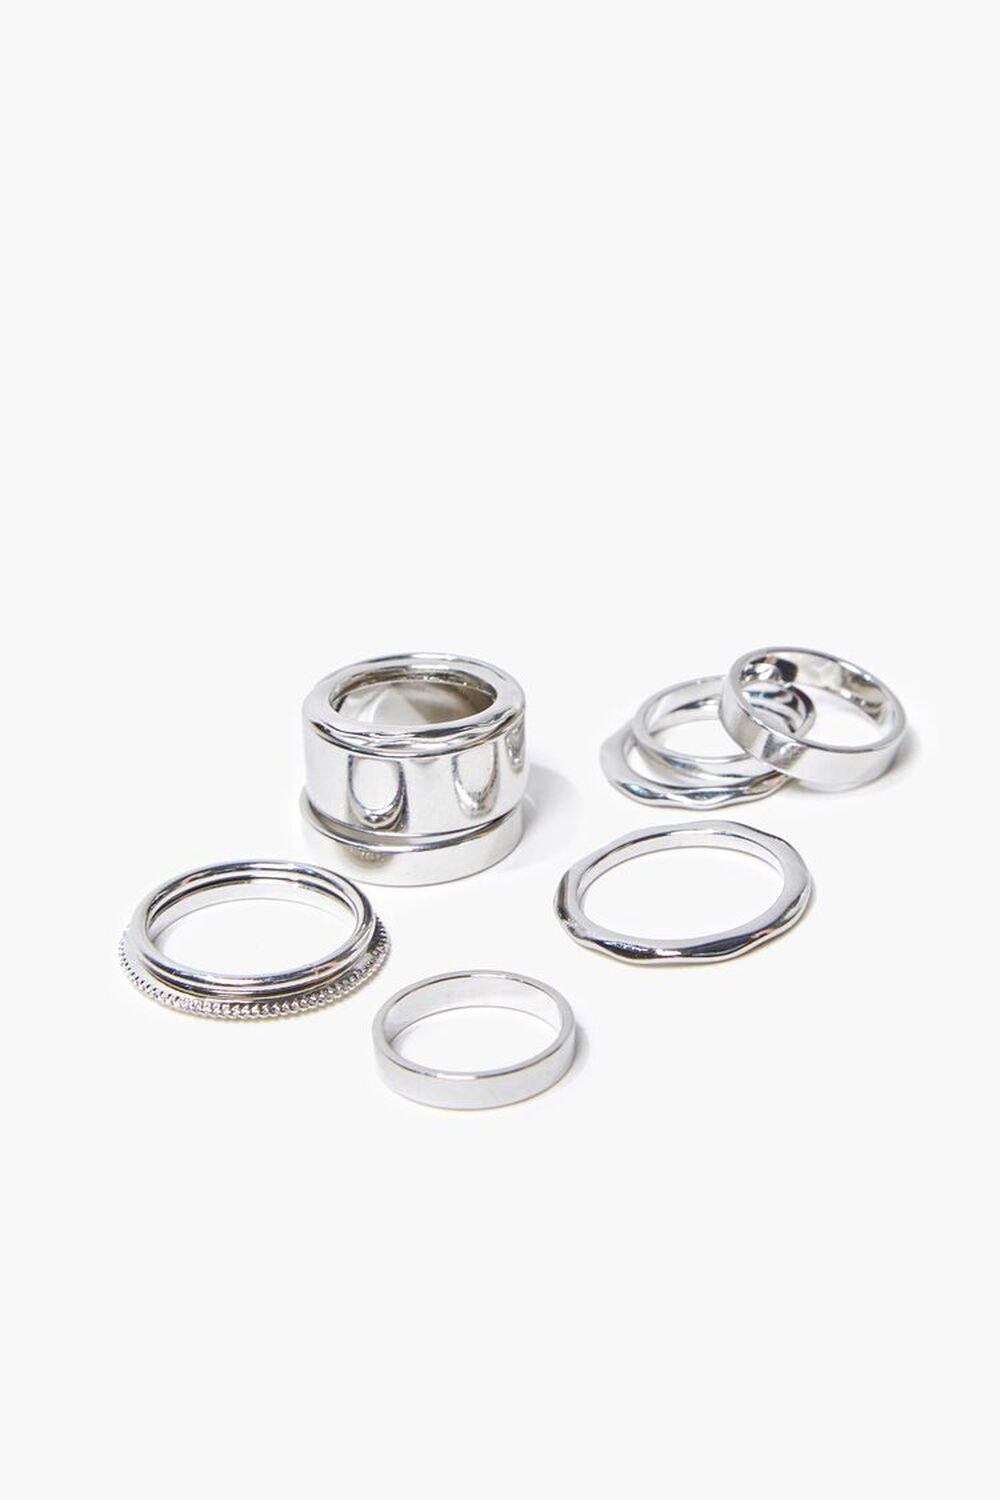 SILVER High-Polish Ring Set, image 1